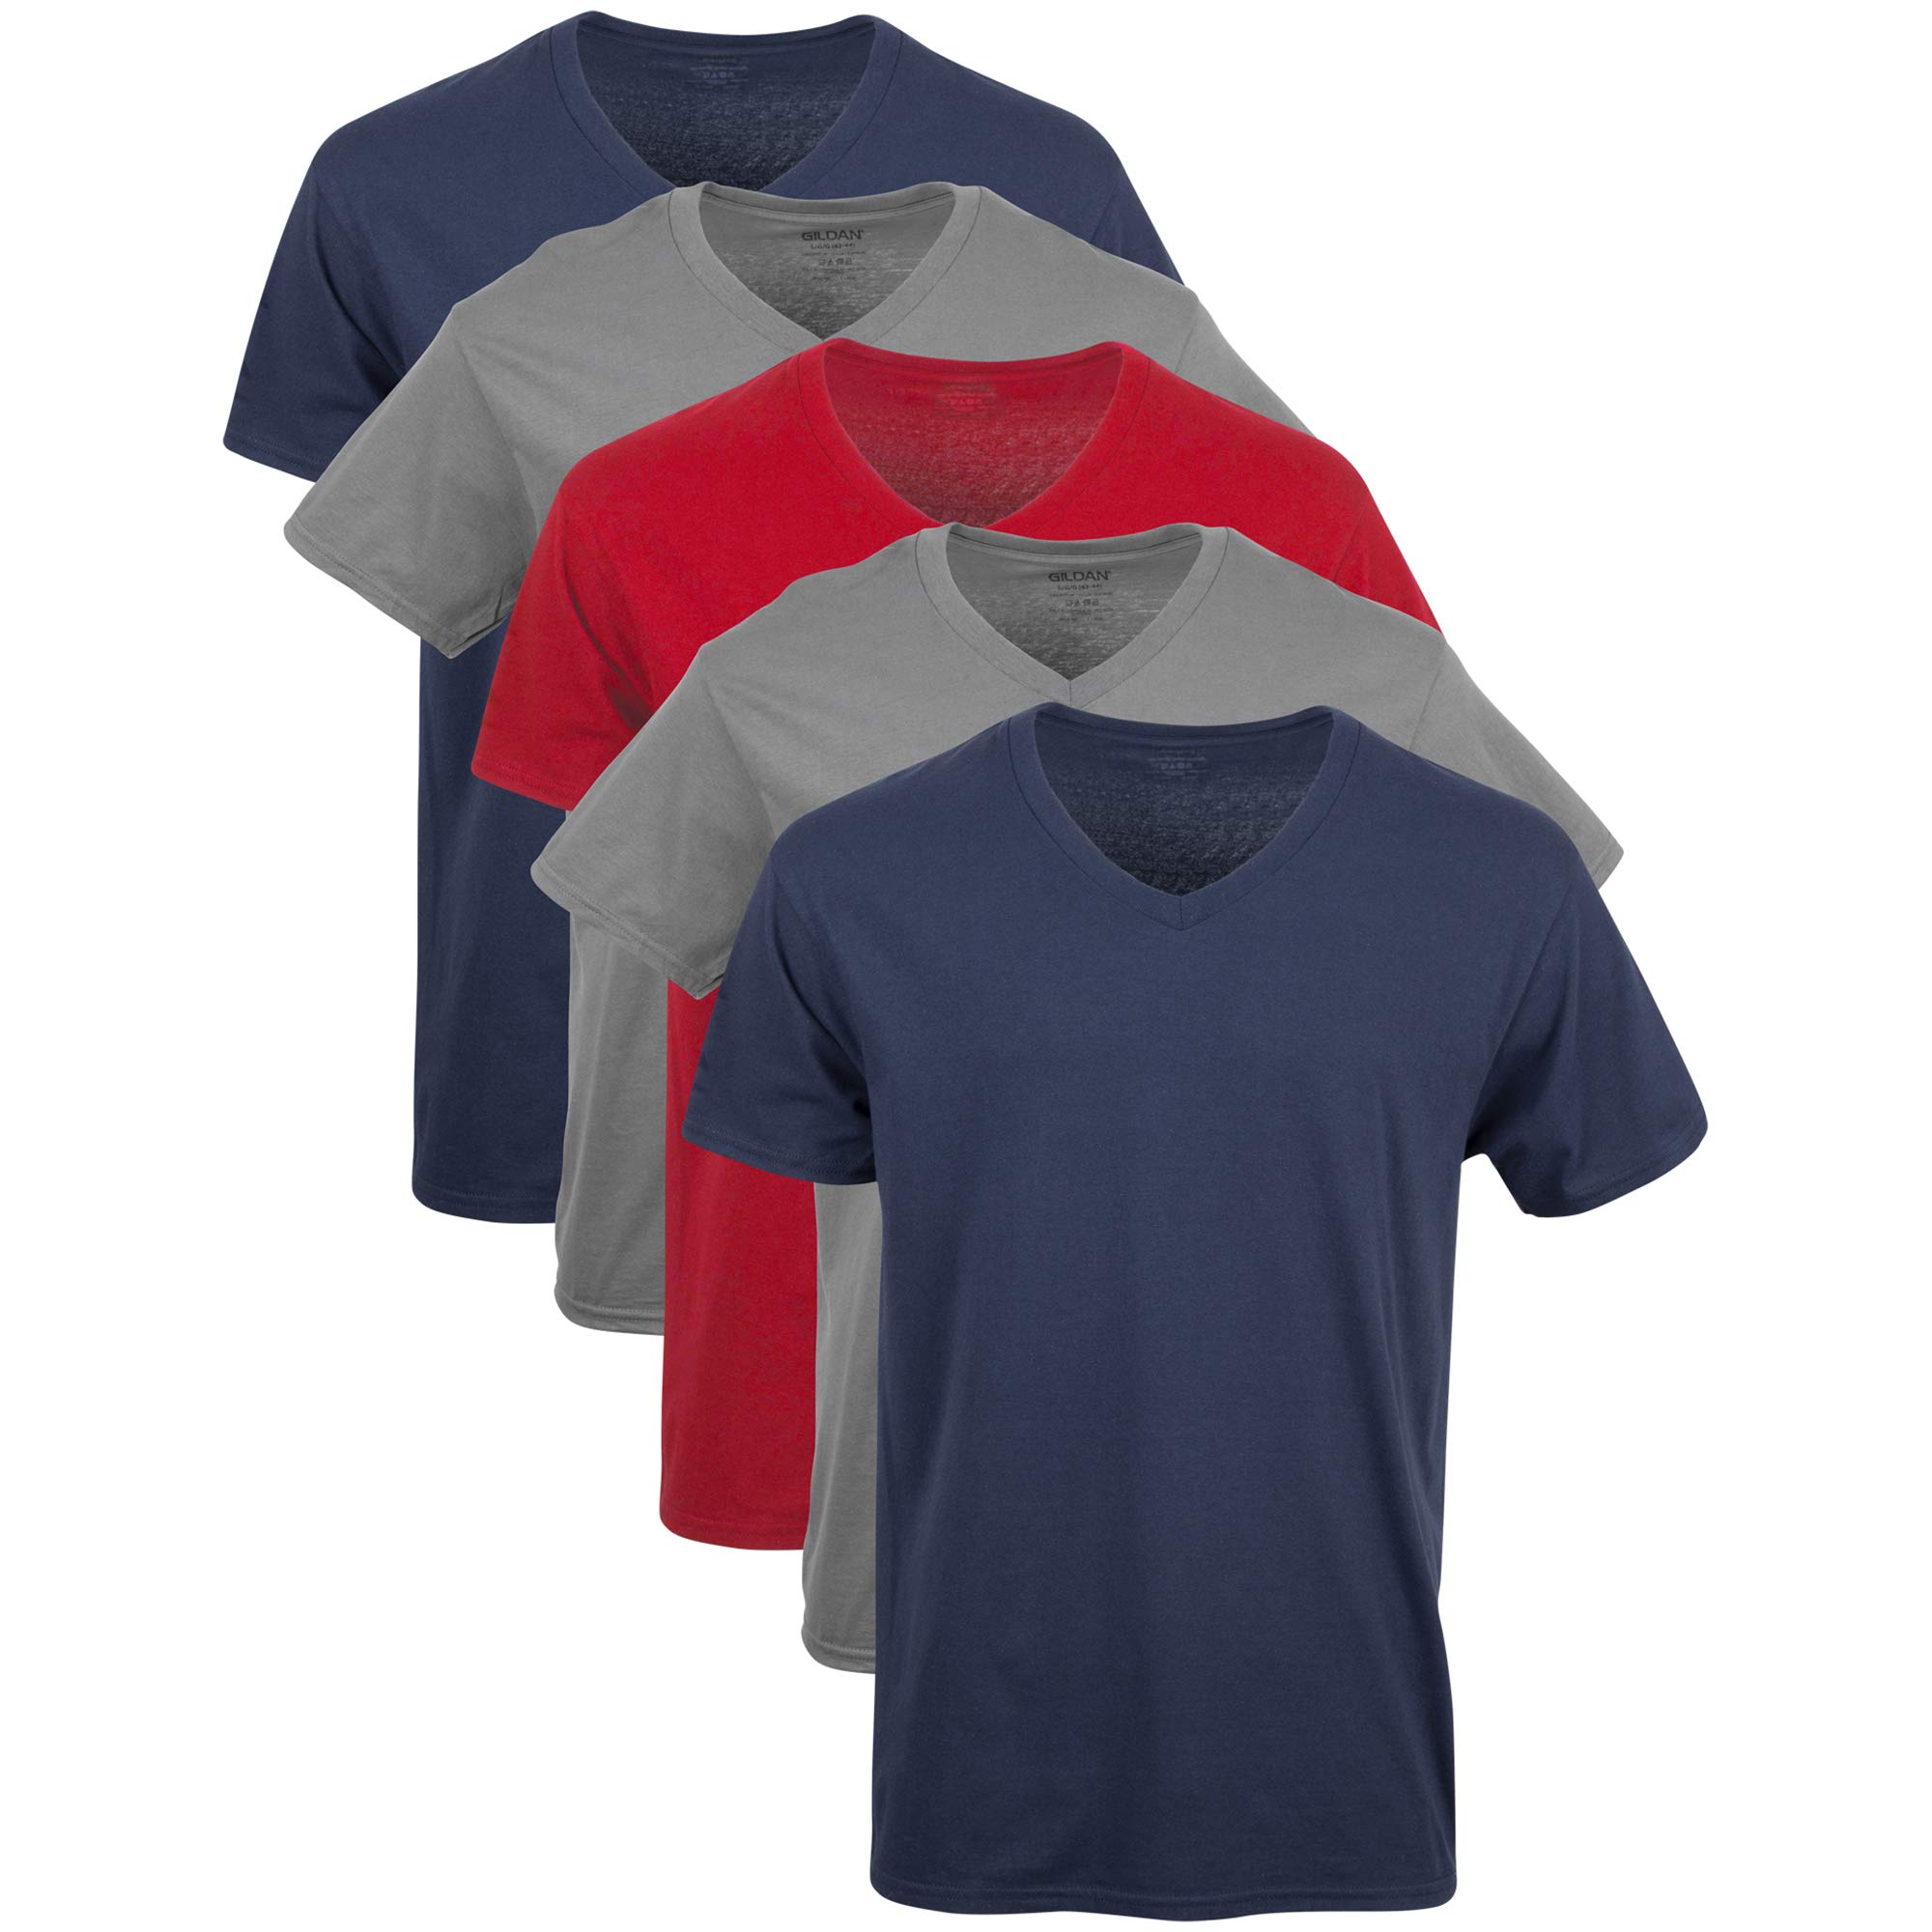 Gildan Men's V-neck T-shirts, Multipack, Style G1103